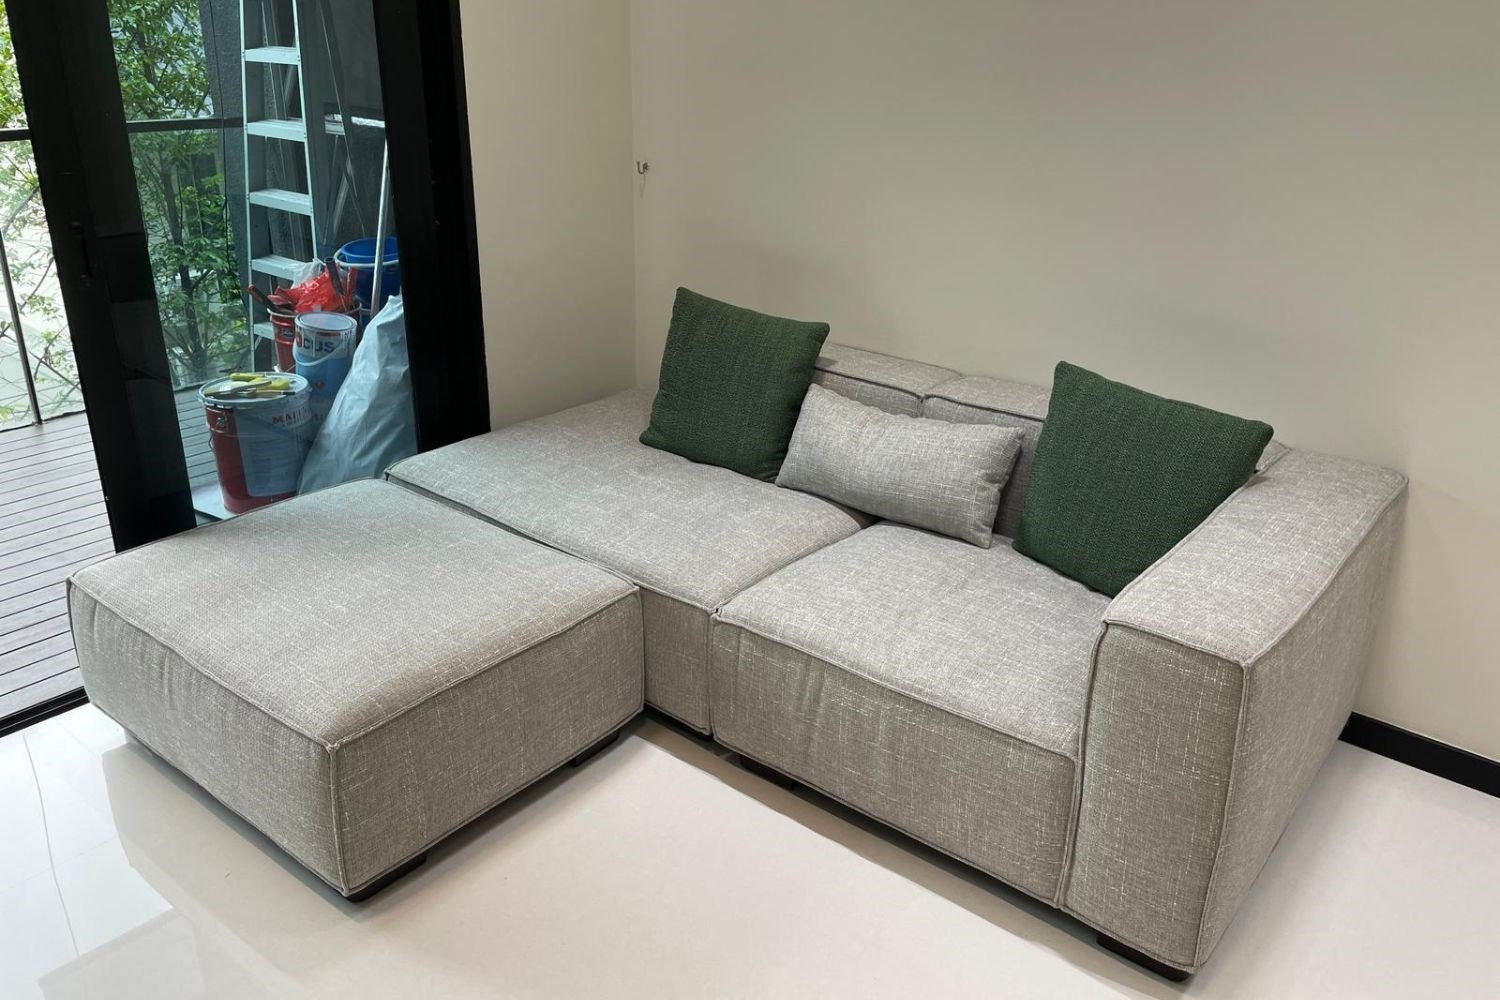 Customized 210cm fabric sofa in real customer's home 